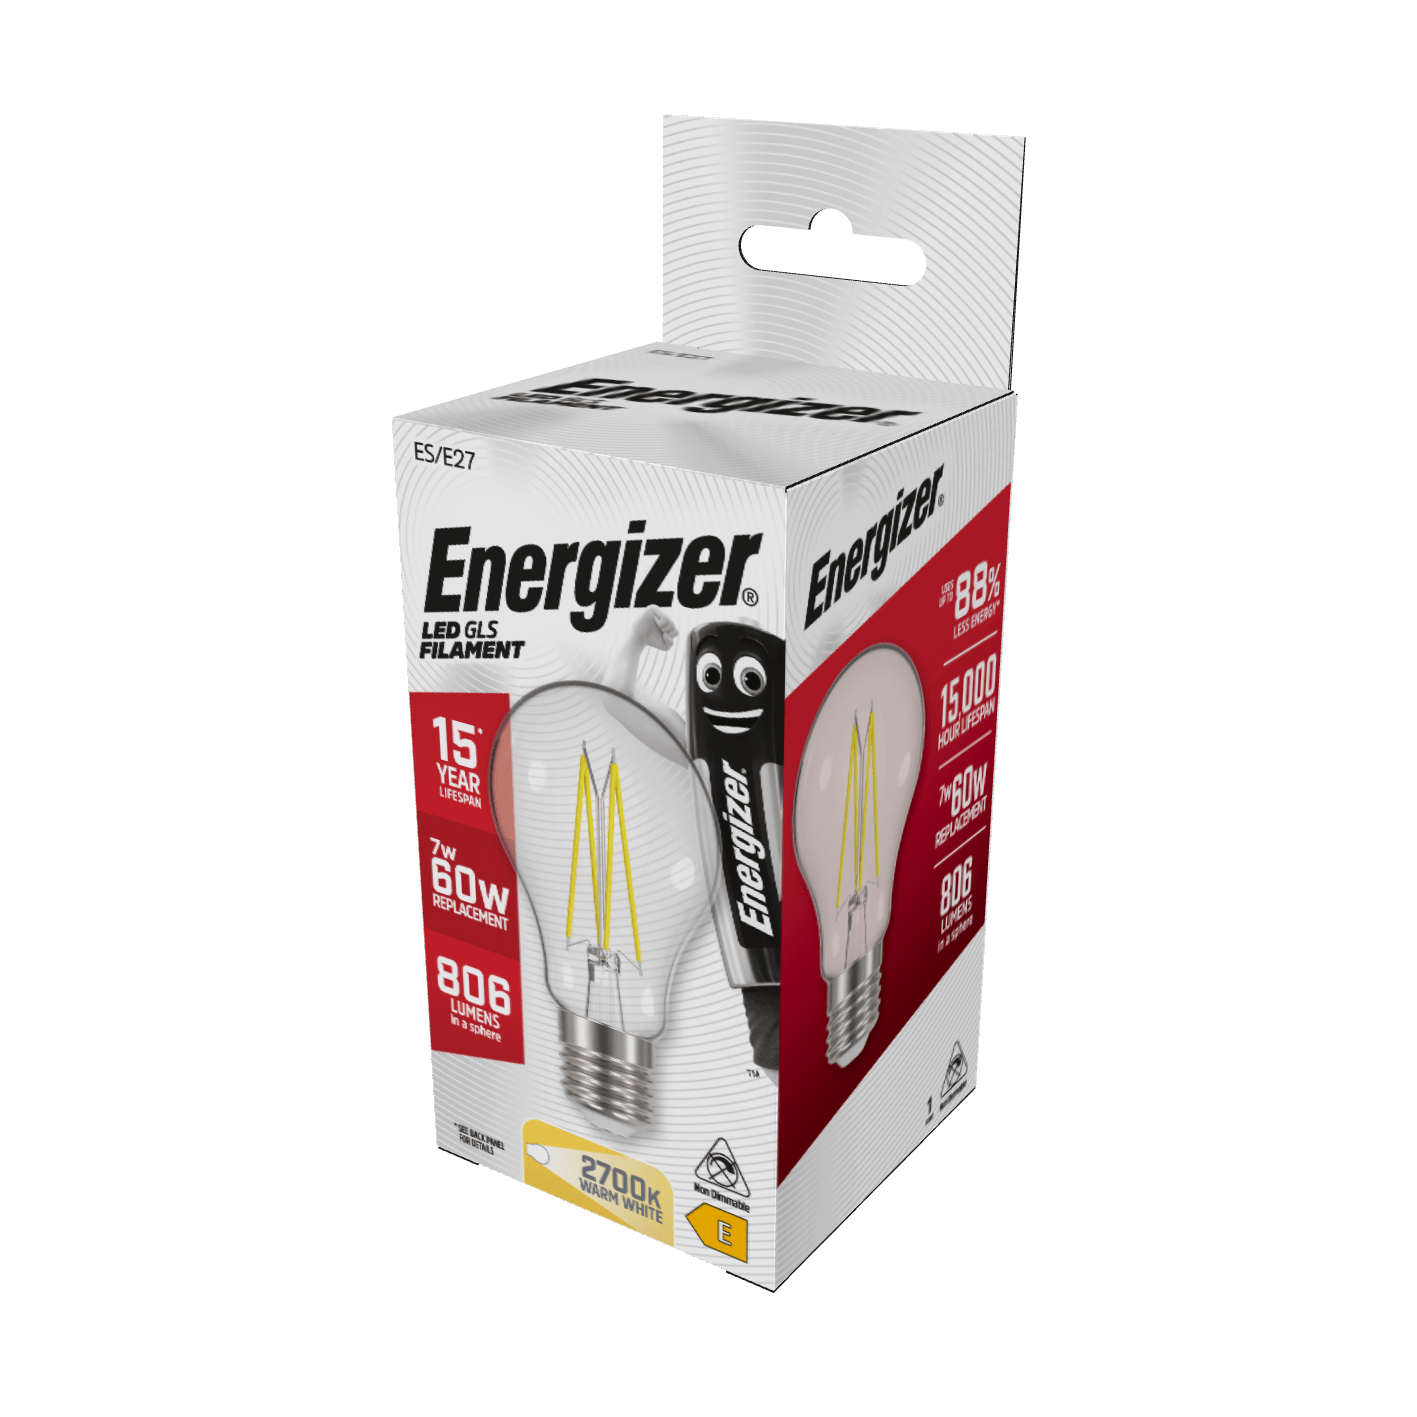 Lights  -  Energizer E27 Filament LED Warm White Lightbulb 60W  -  60003323